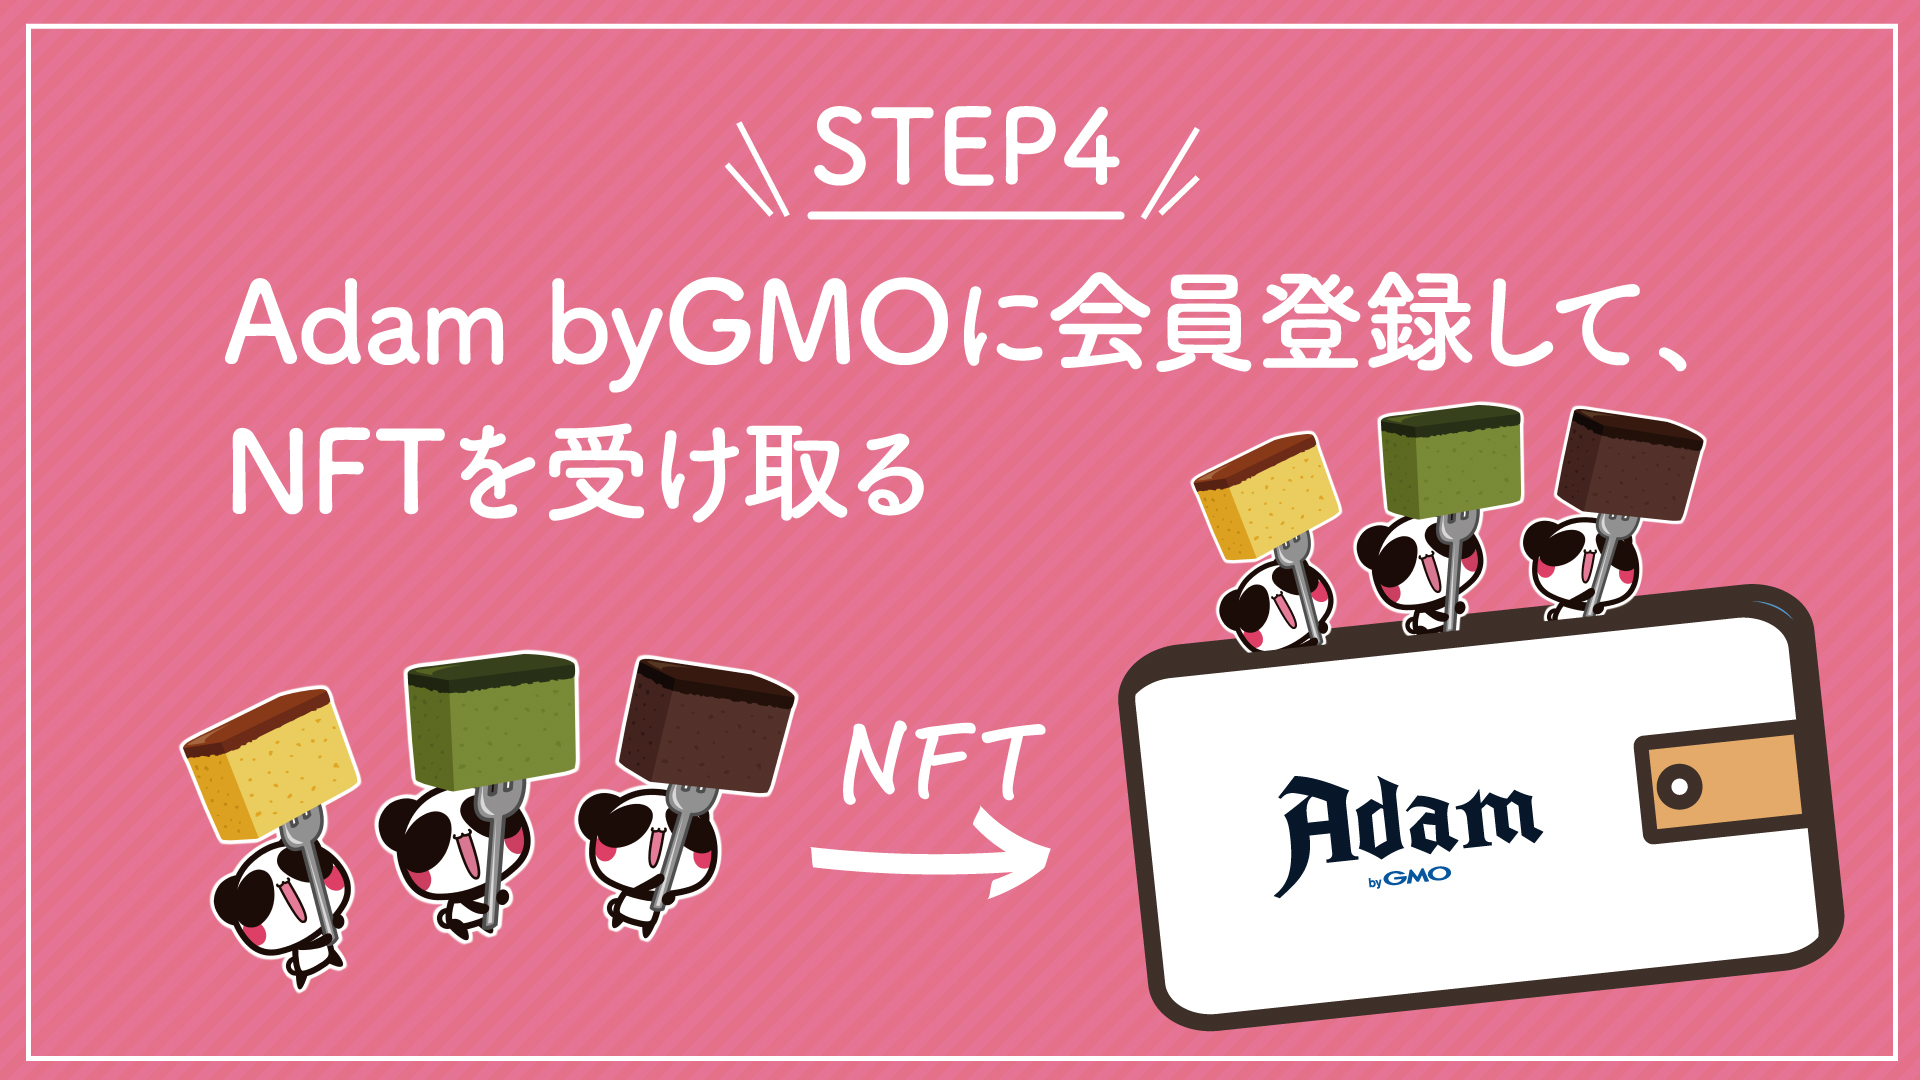 STEP4 Adam by GMOに会員登録して、NFTを受け取る